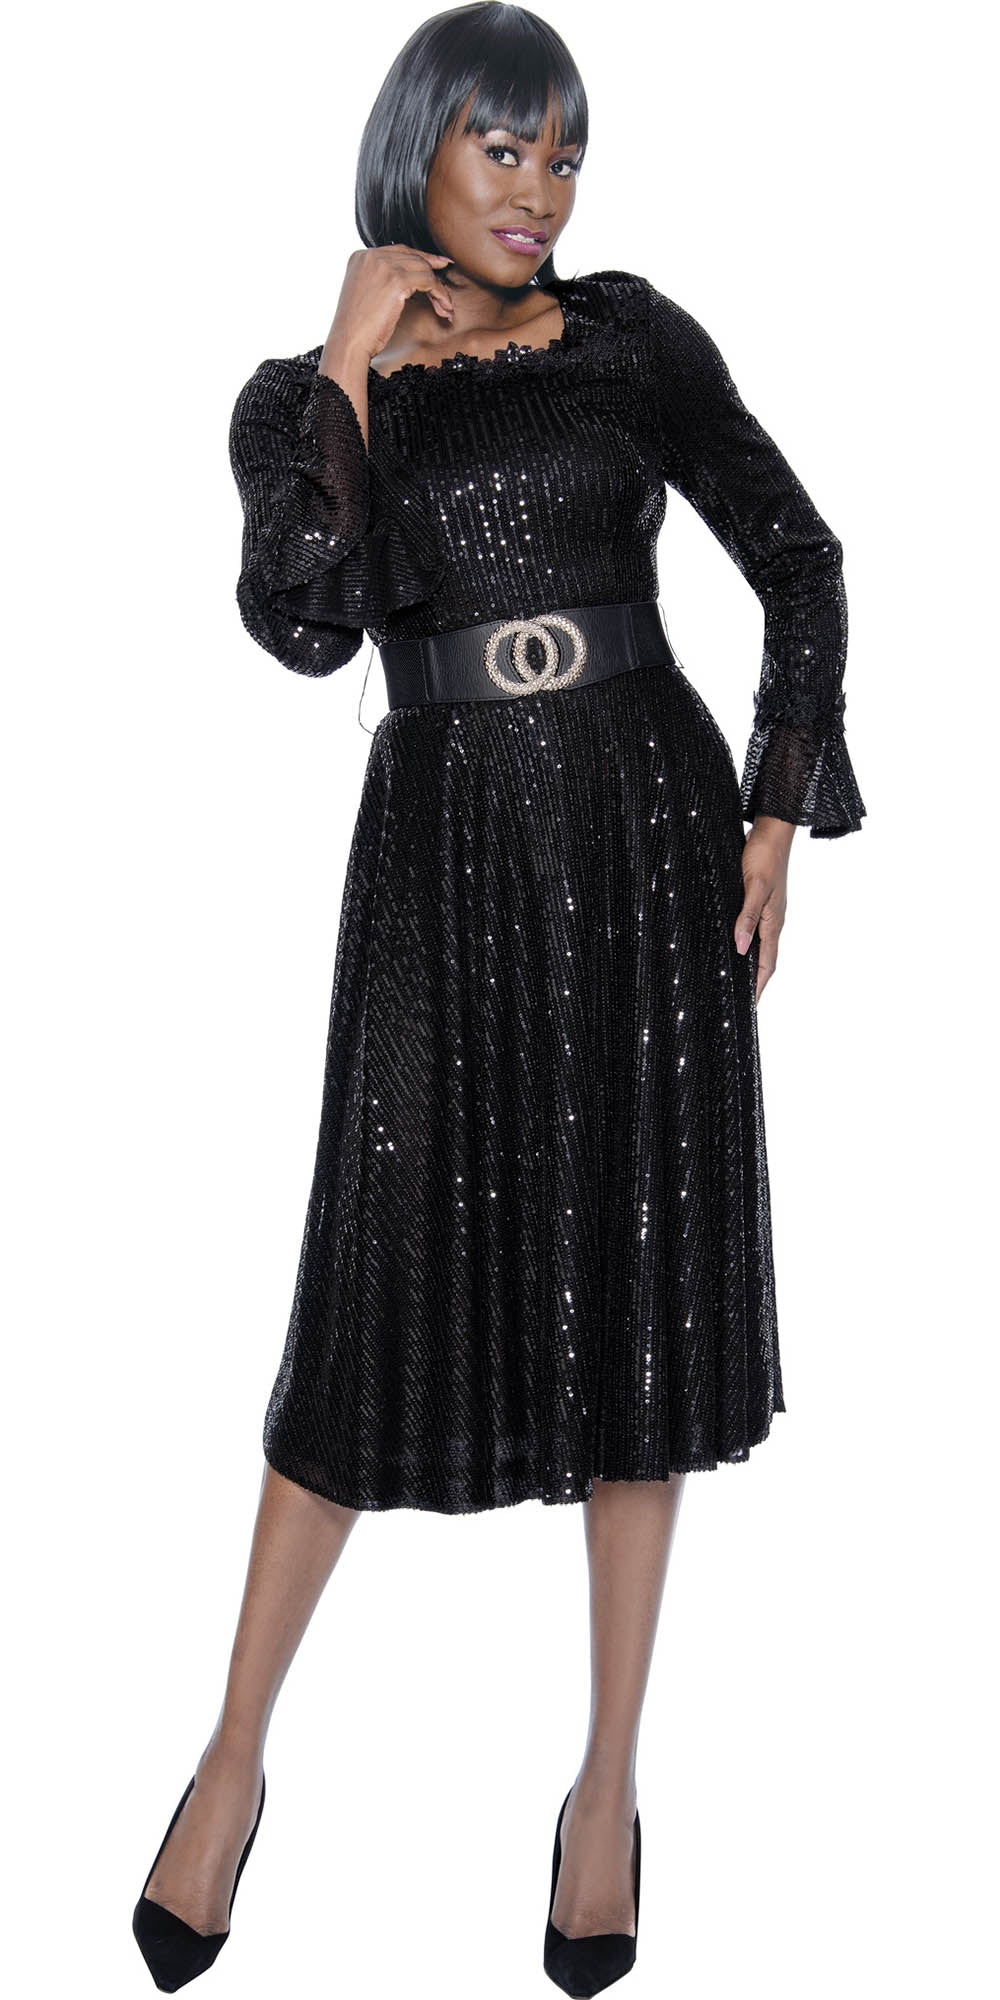 Terramina - 7084 - Black - Belted Sequin Overlay Dress